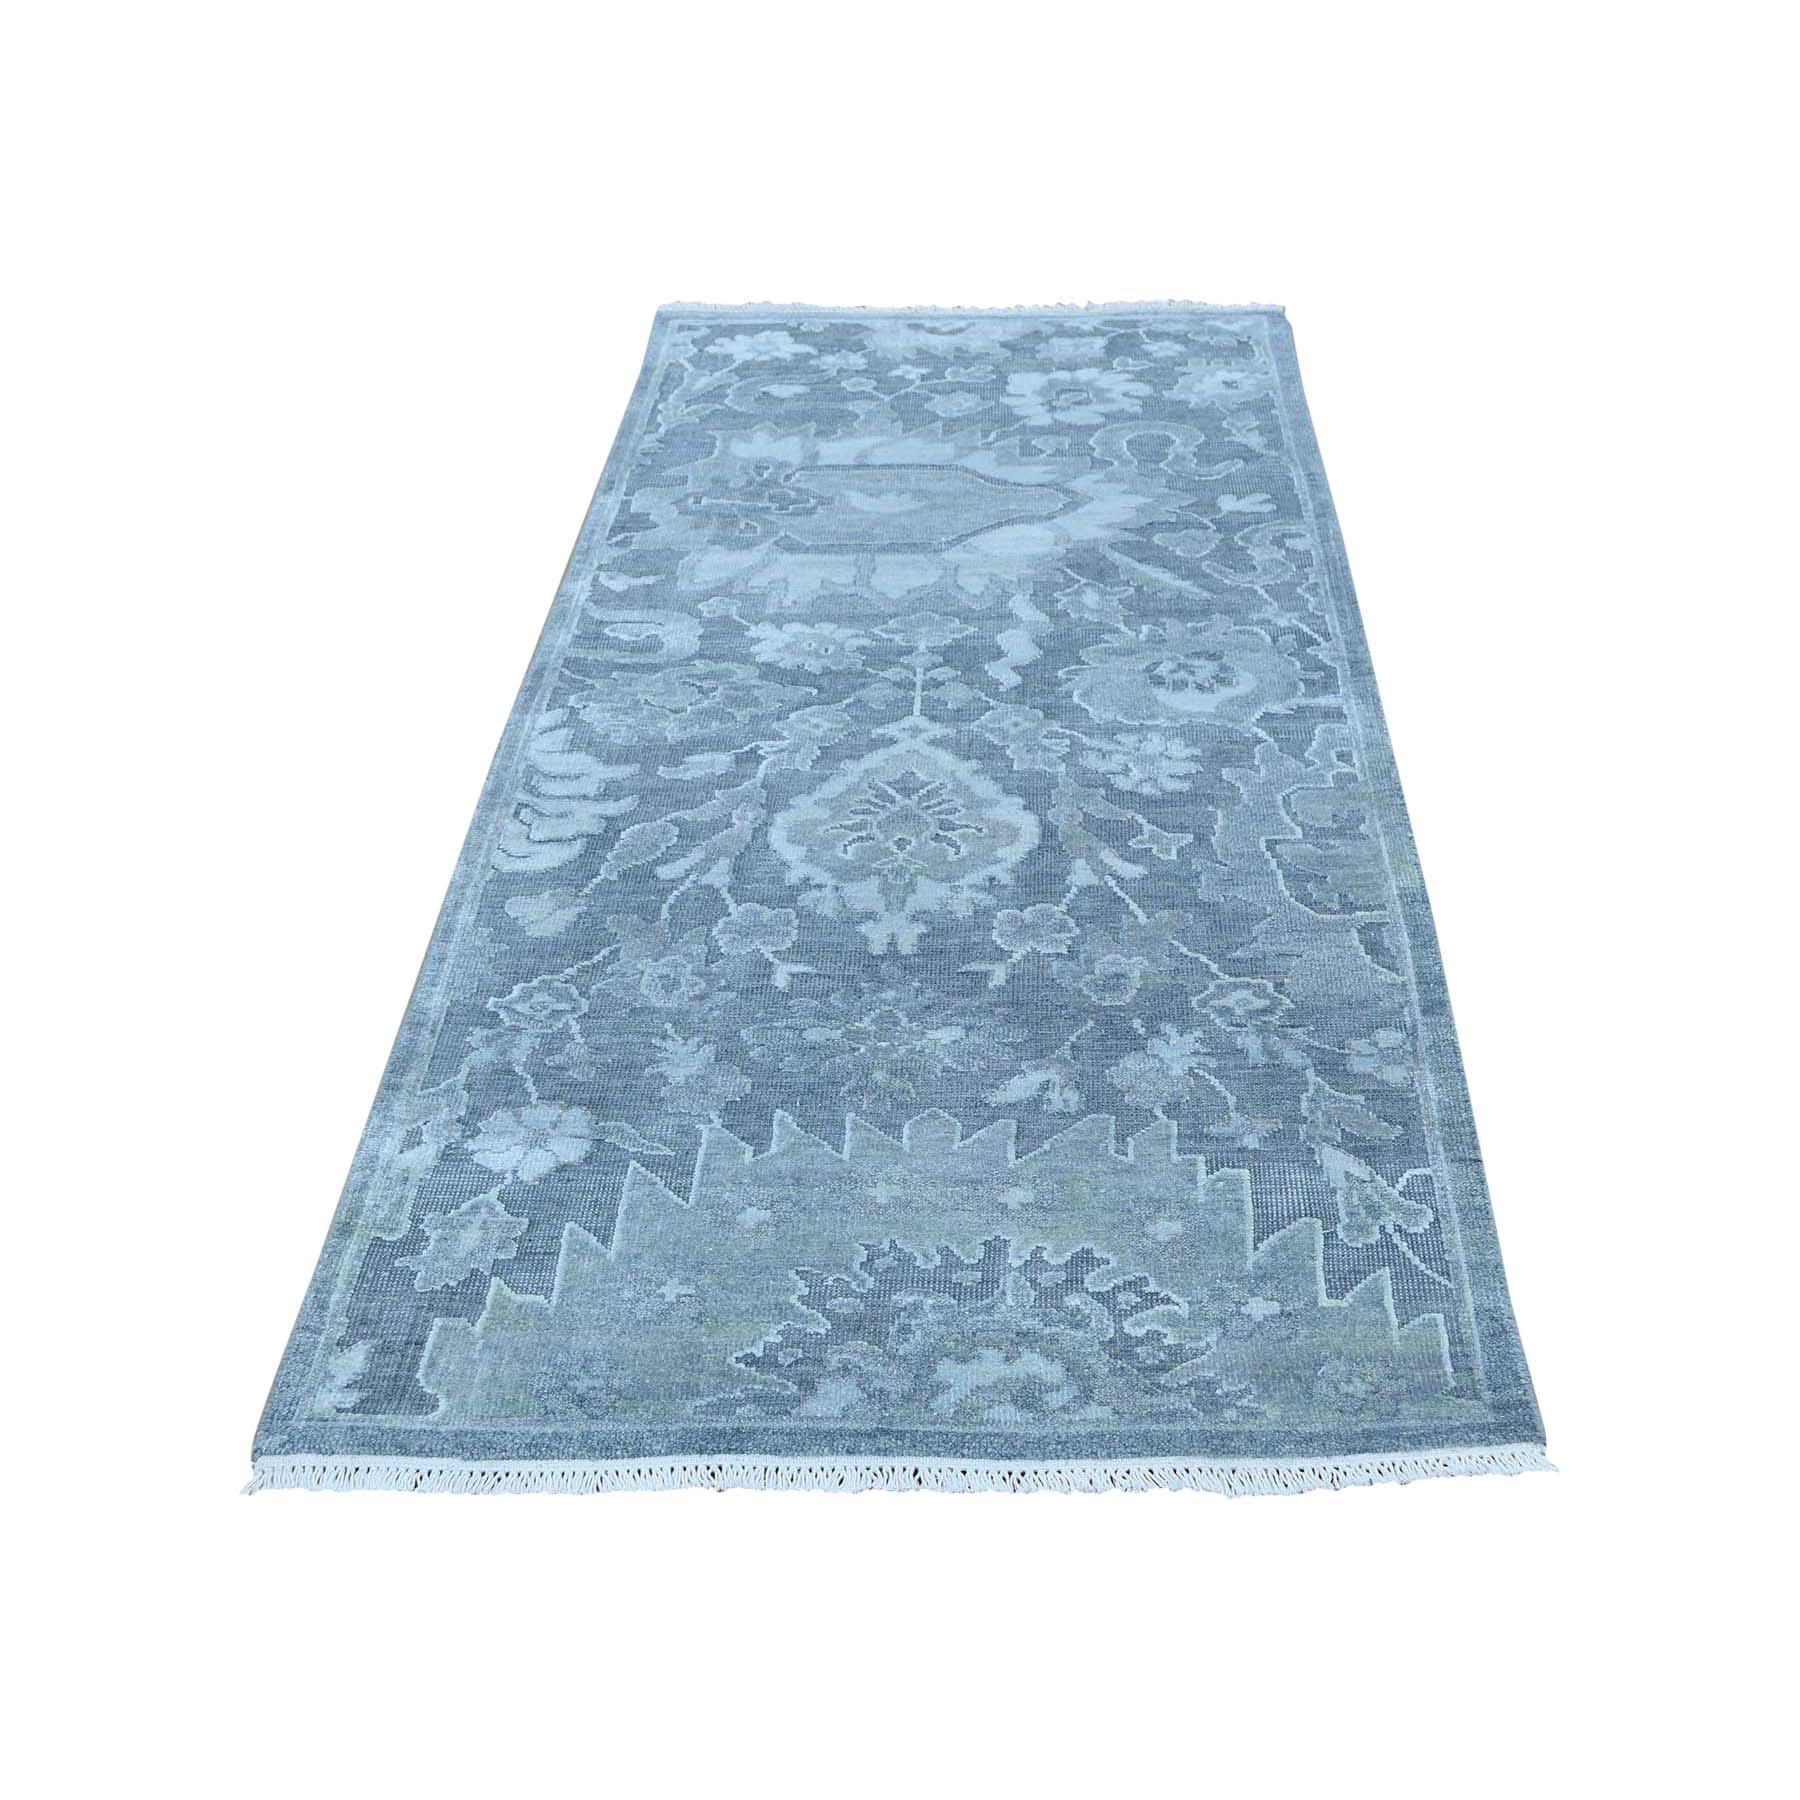 2'5"x6'3" Pure Silk with Textured Wool Oushak Design Oriental Runner Rug 